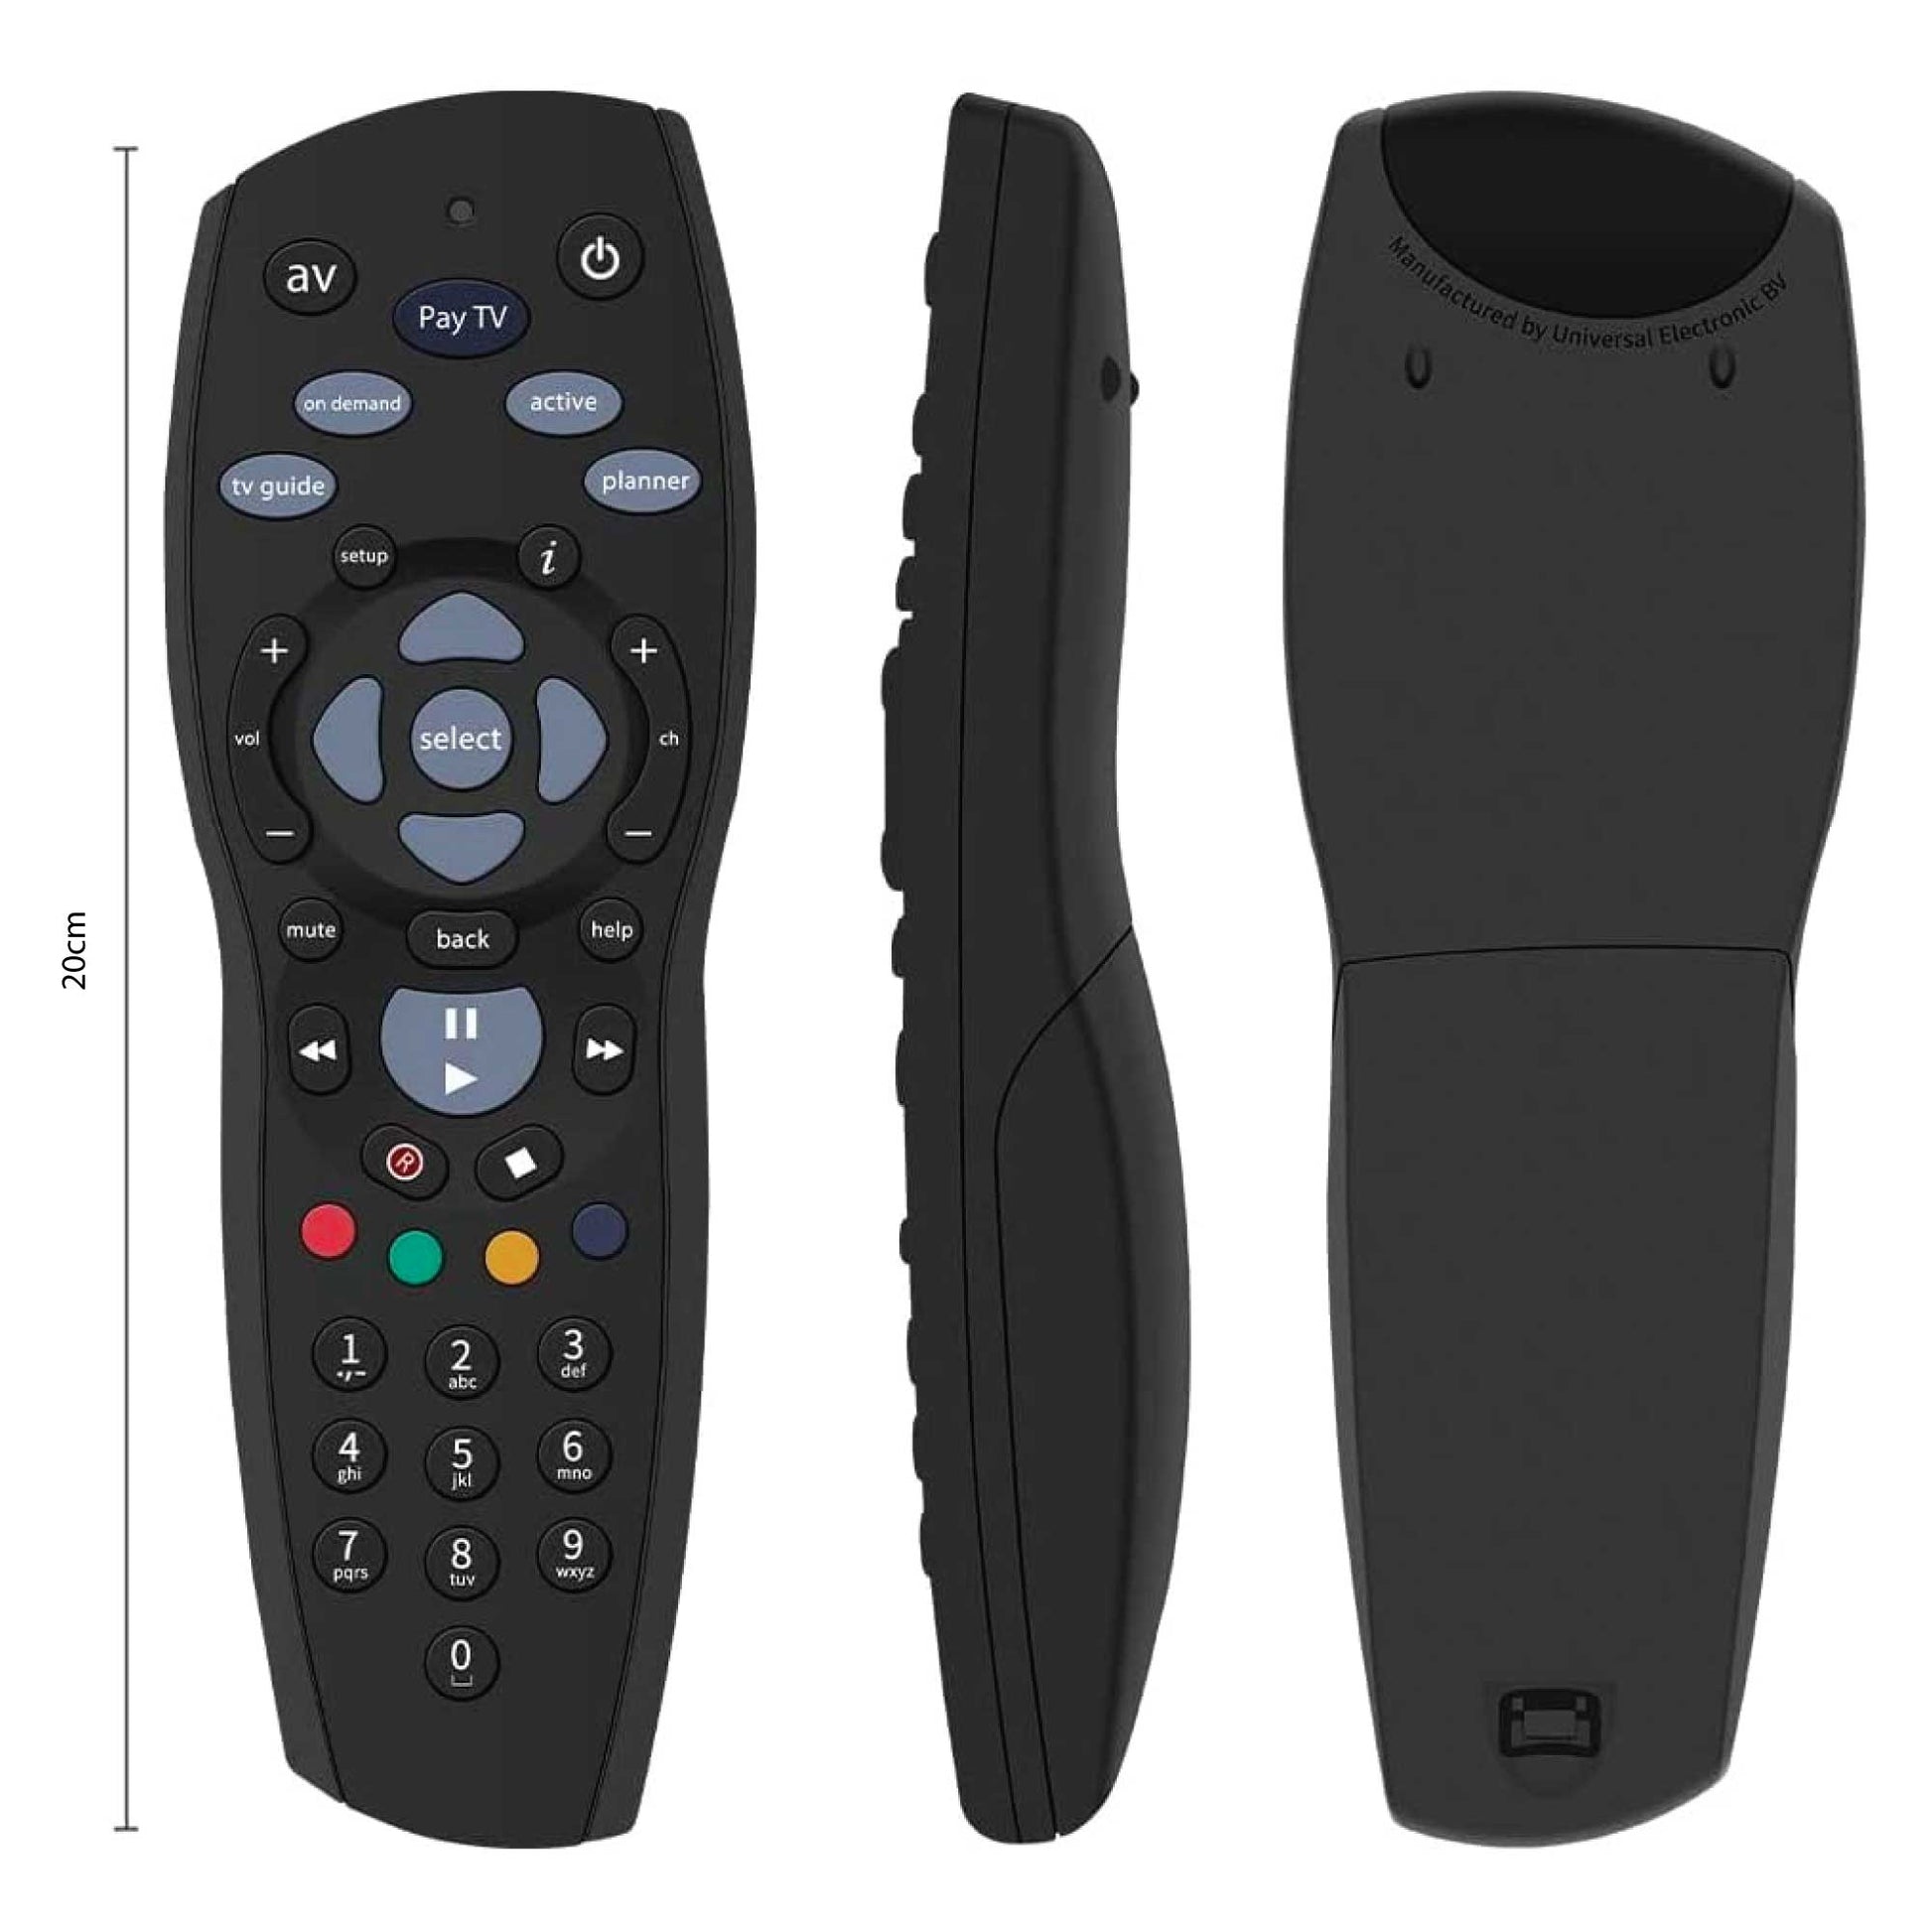 2x PayTV Remote Control Compatible with Foxtel MYSTAR SKY NEW ZEALAND - Black